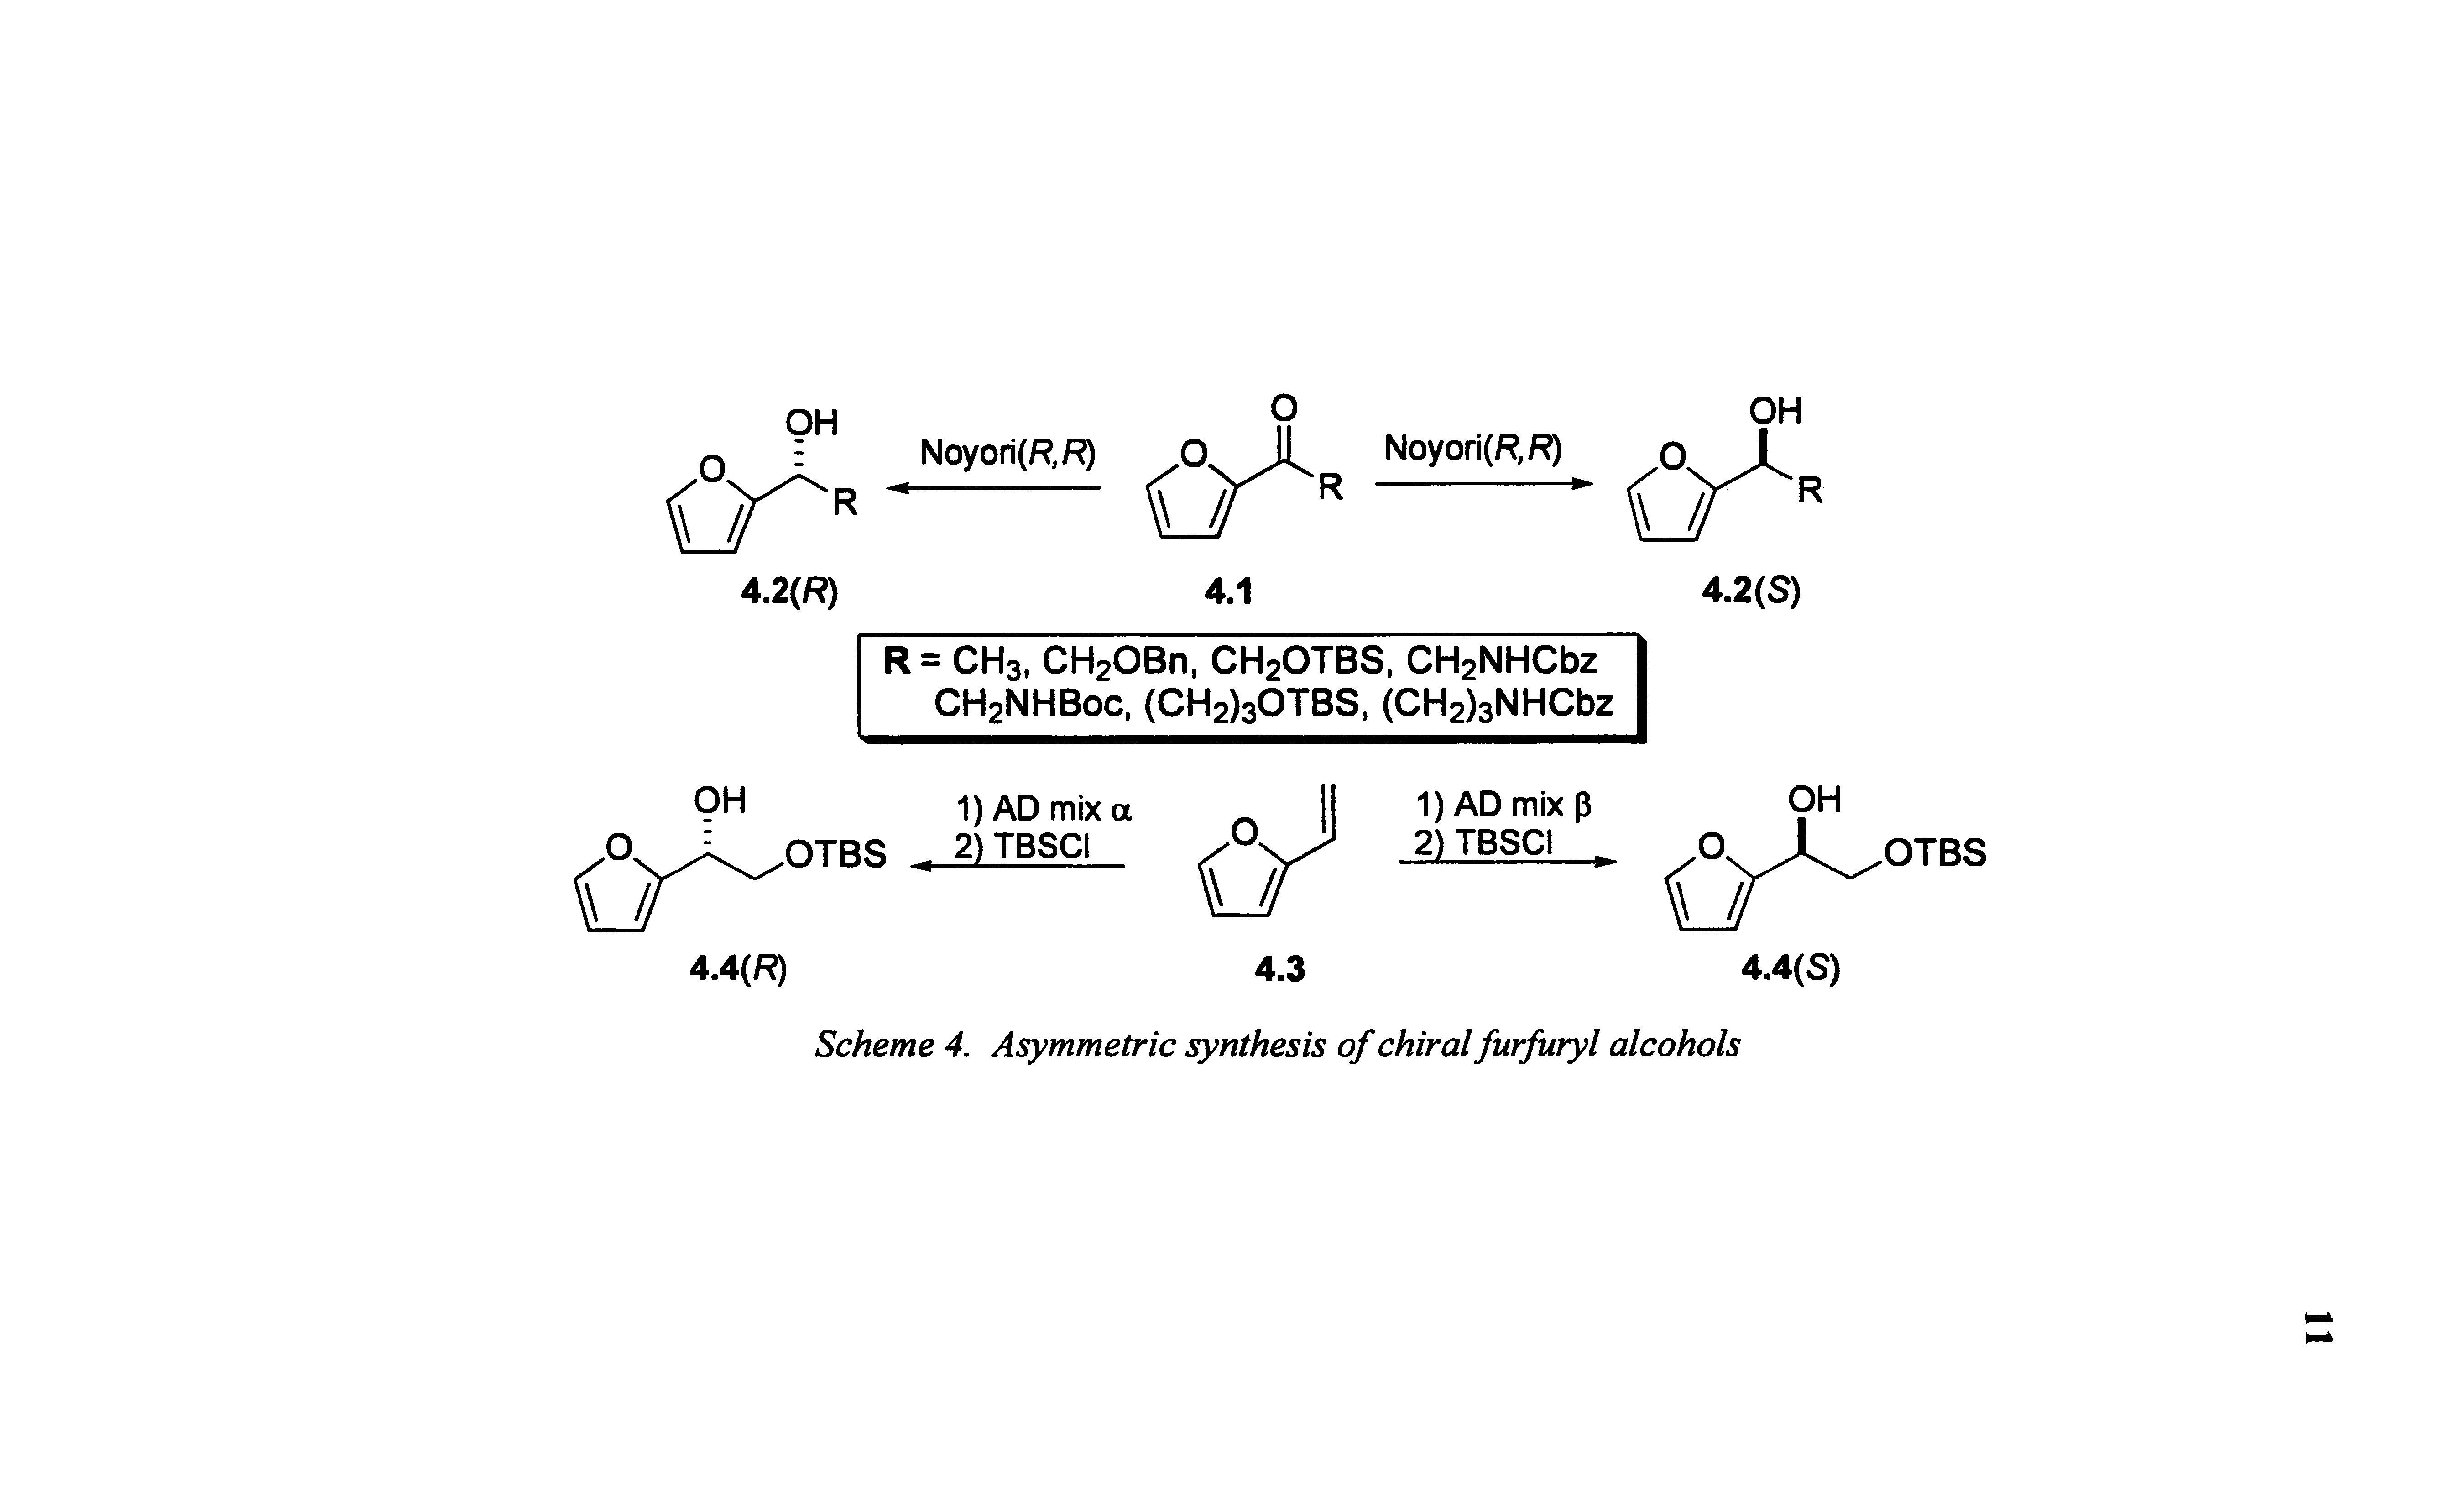 Scheme 4. Asymmetric synthesis of chiral furfuryl alcohols...